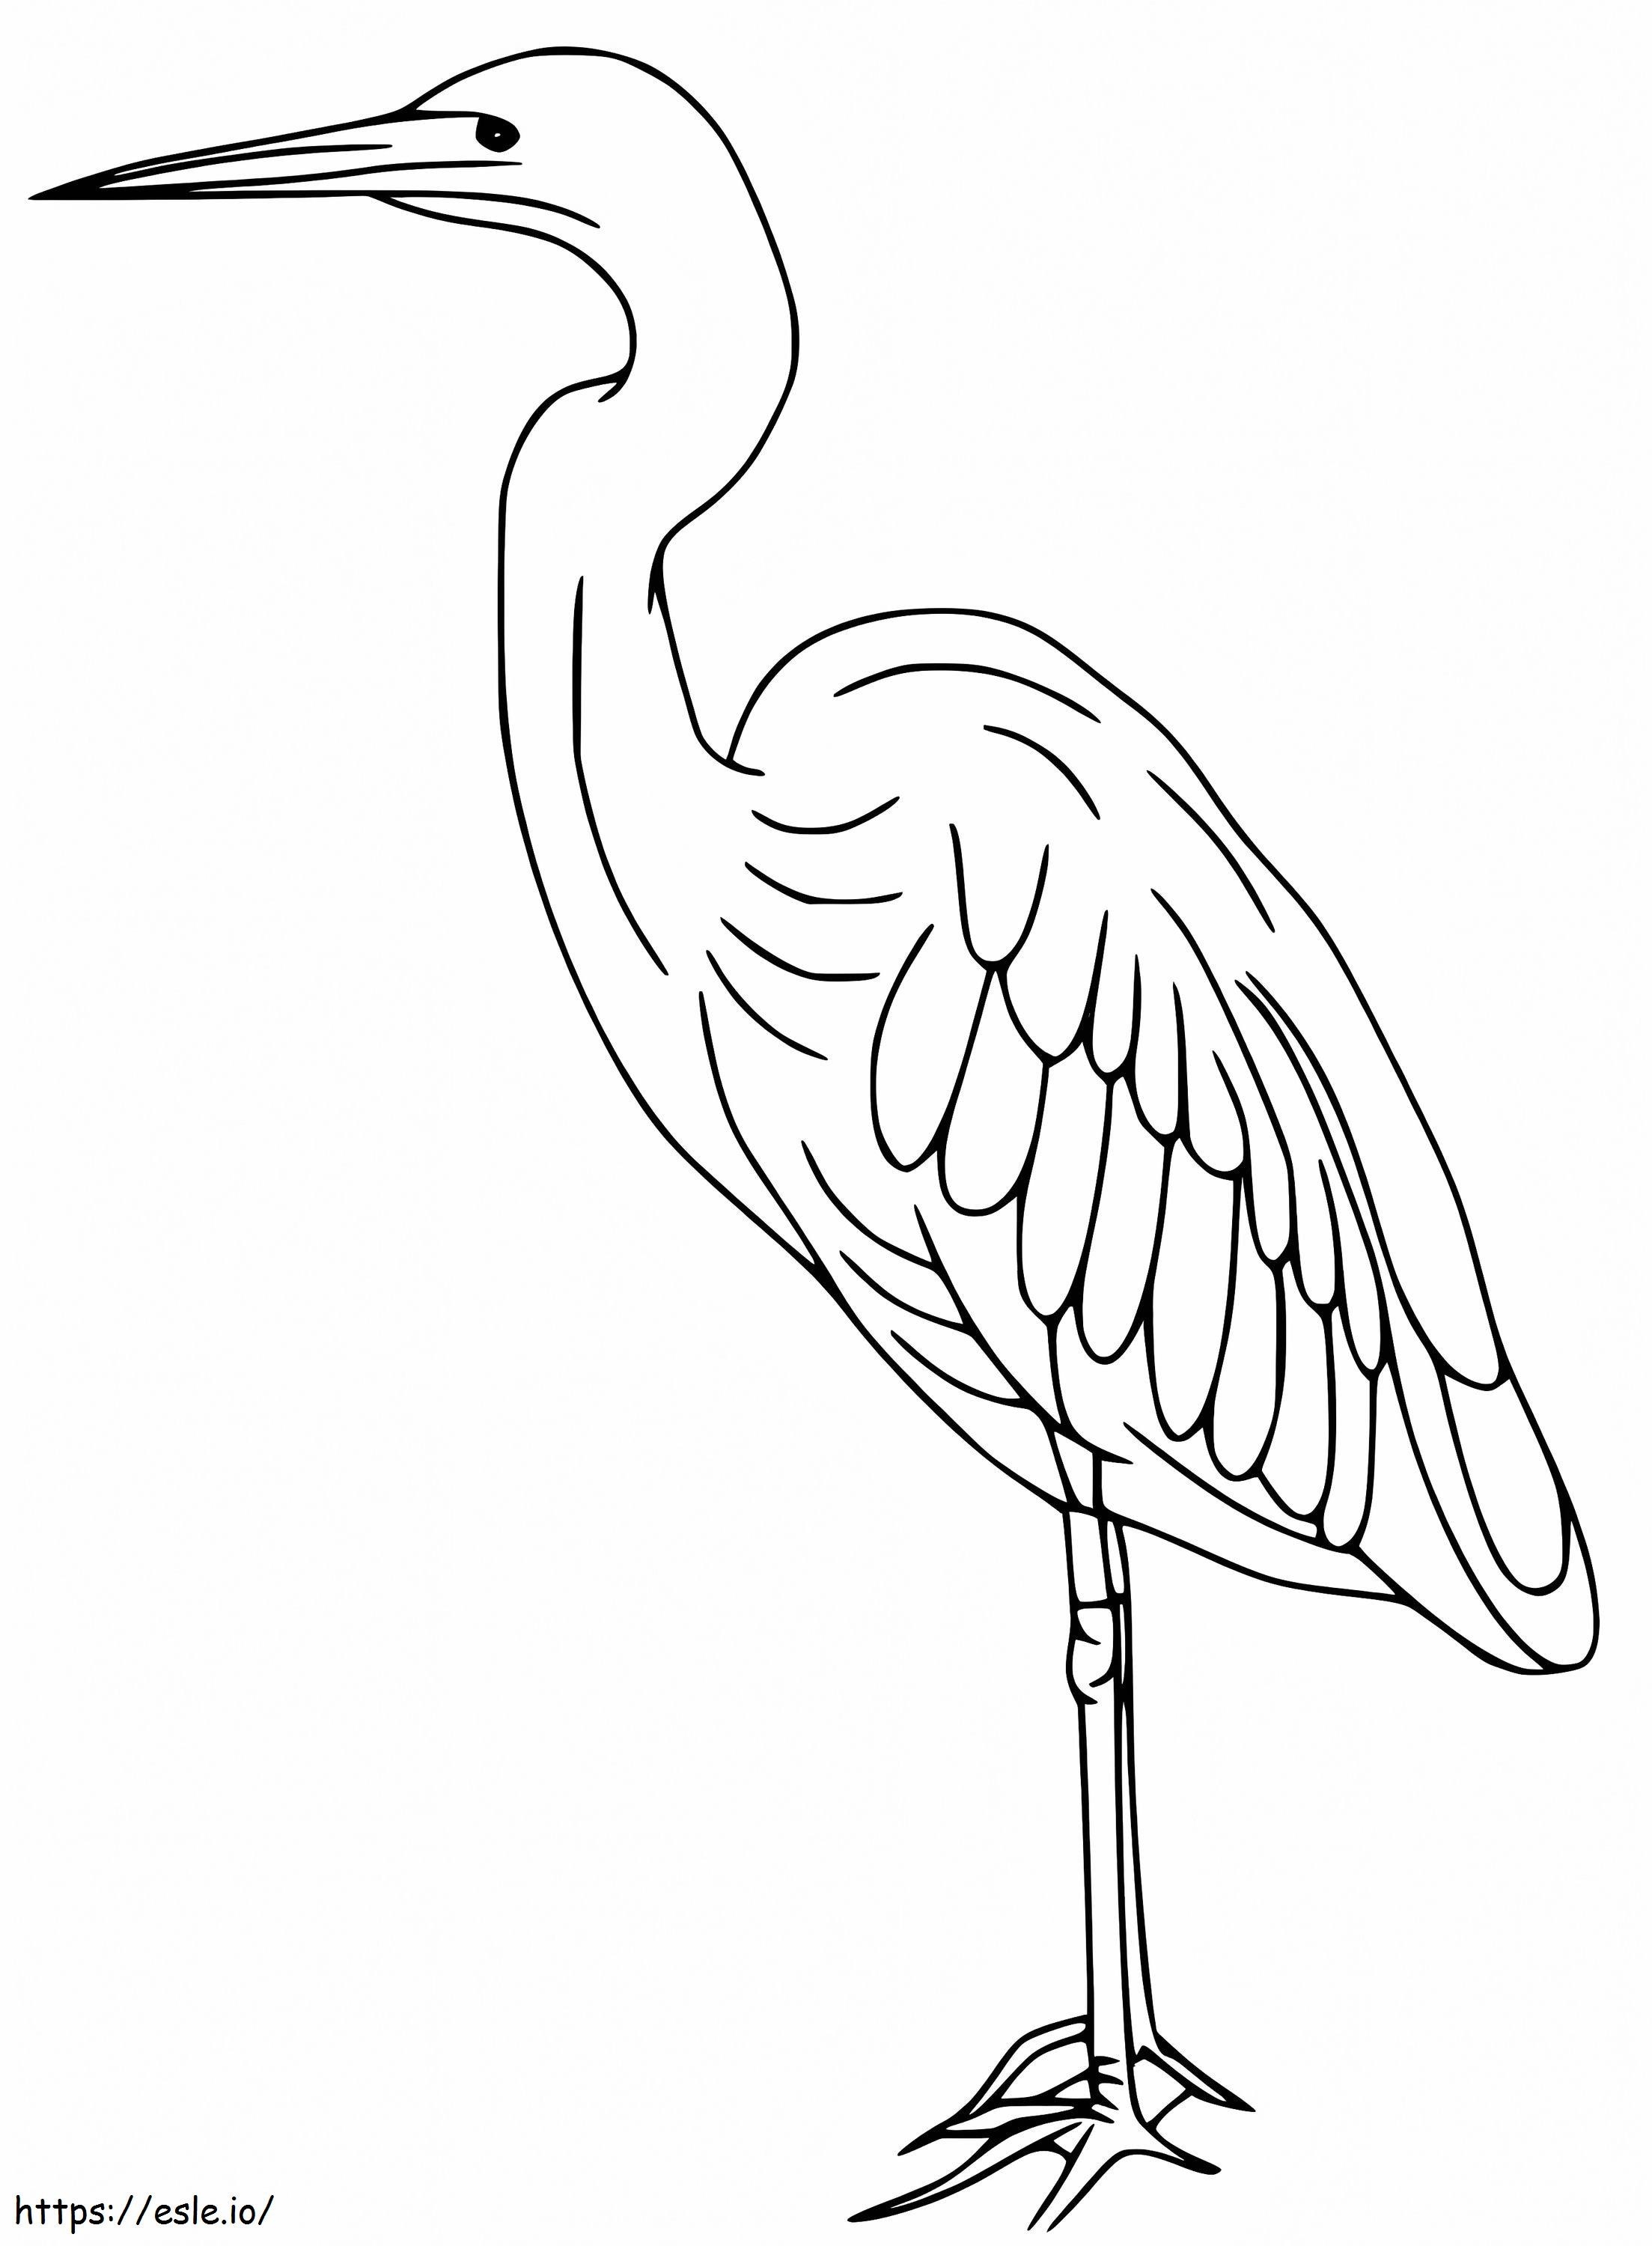 Simple Heron coloring page